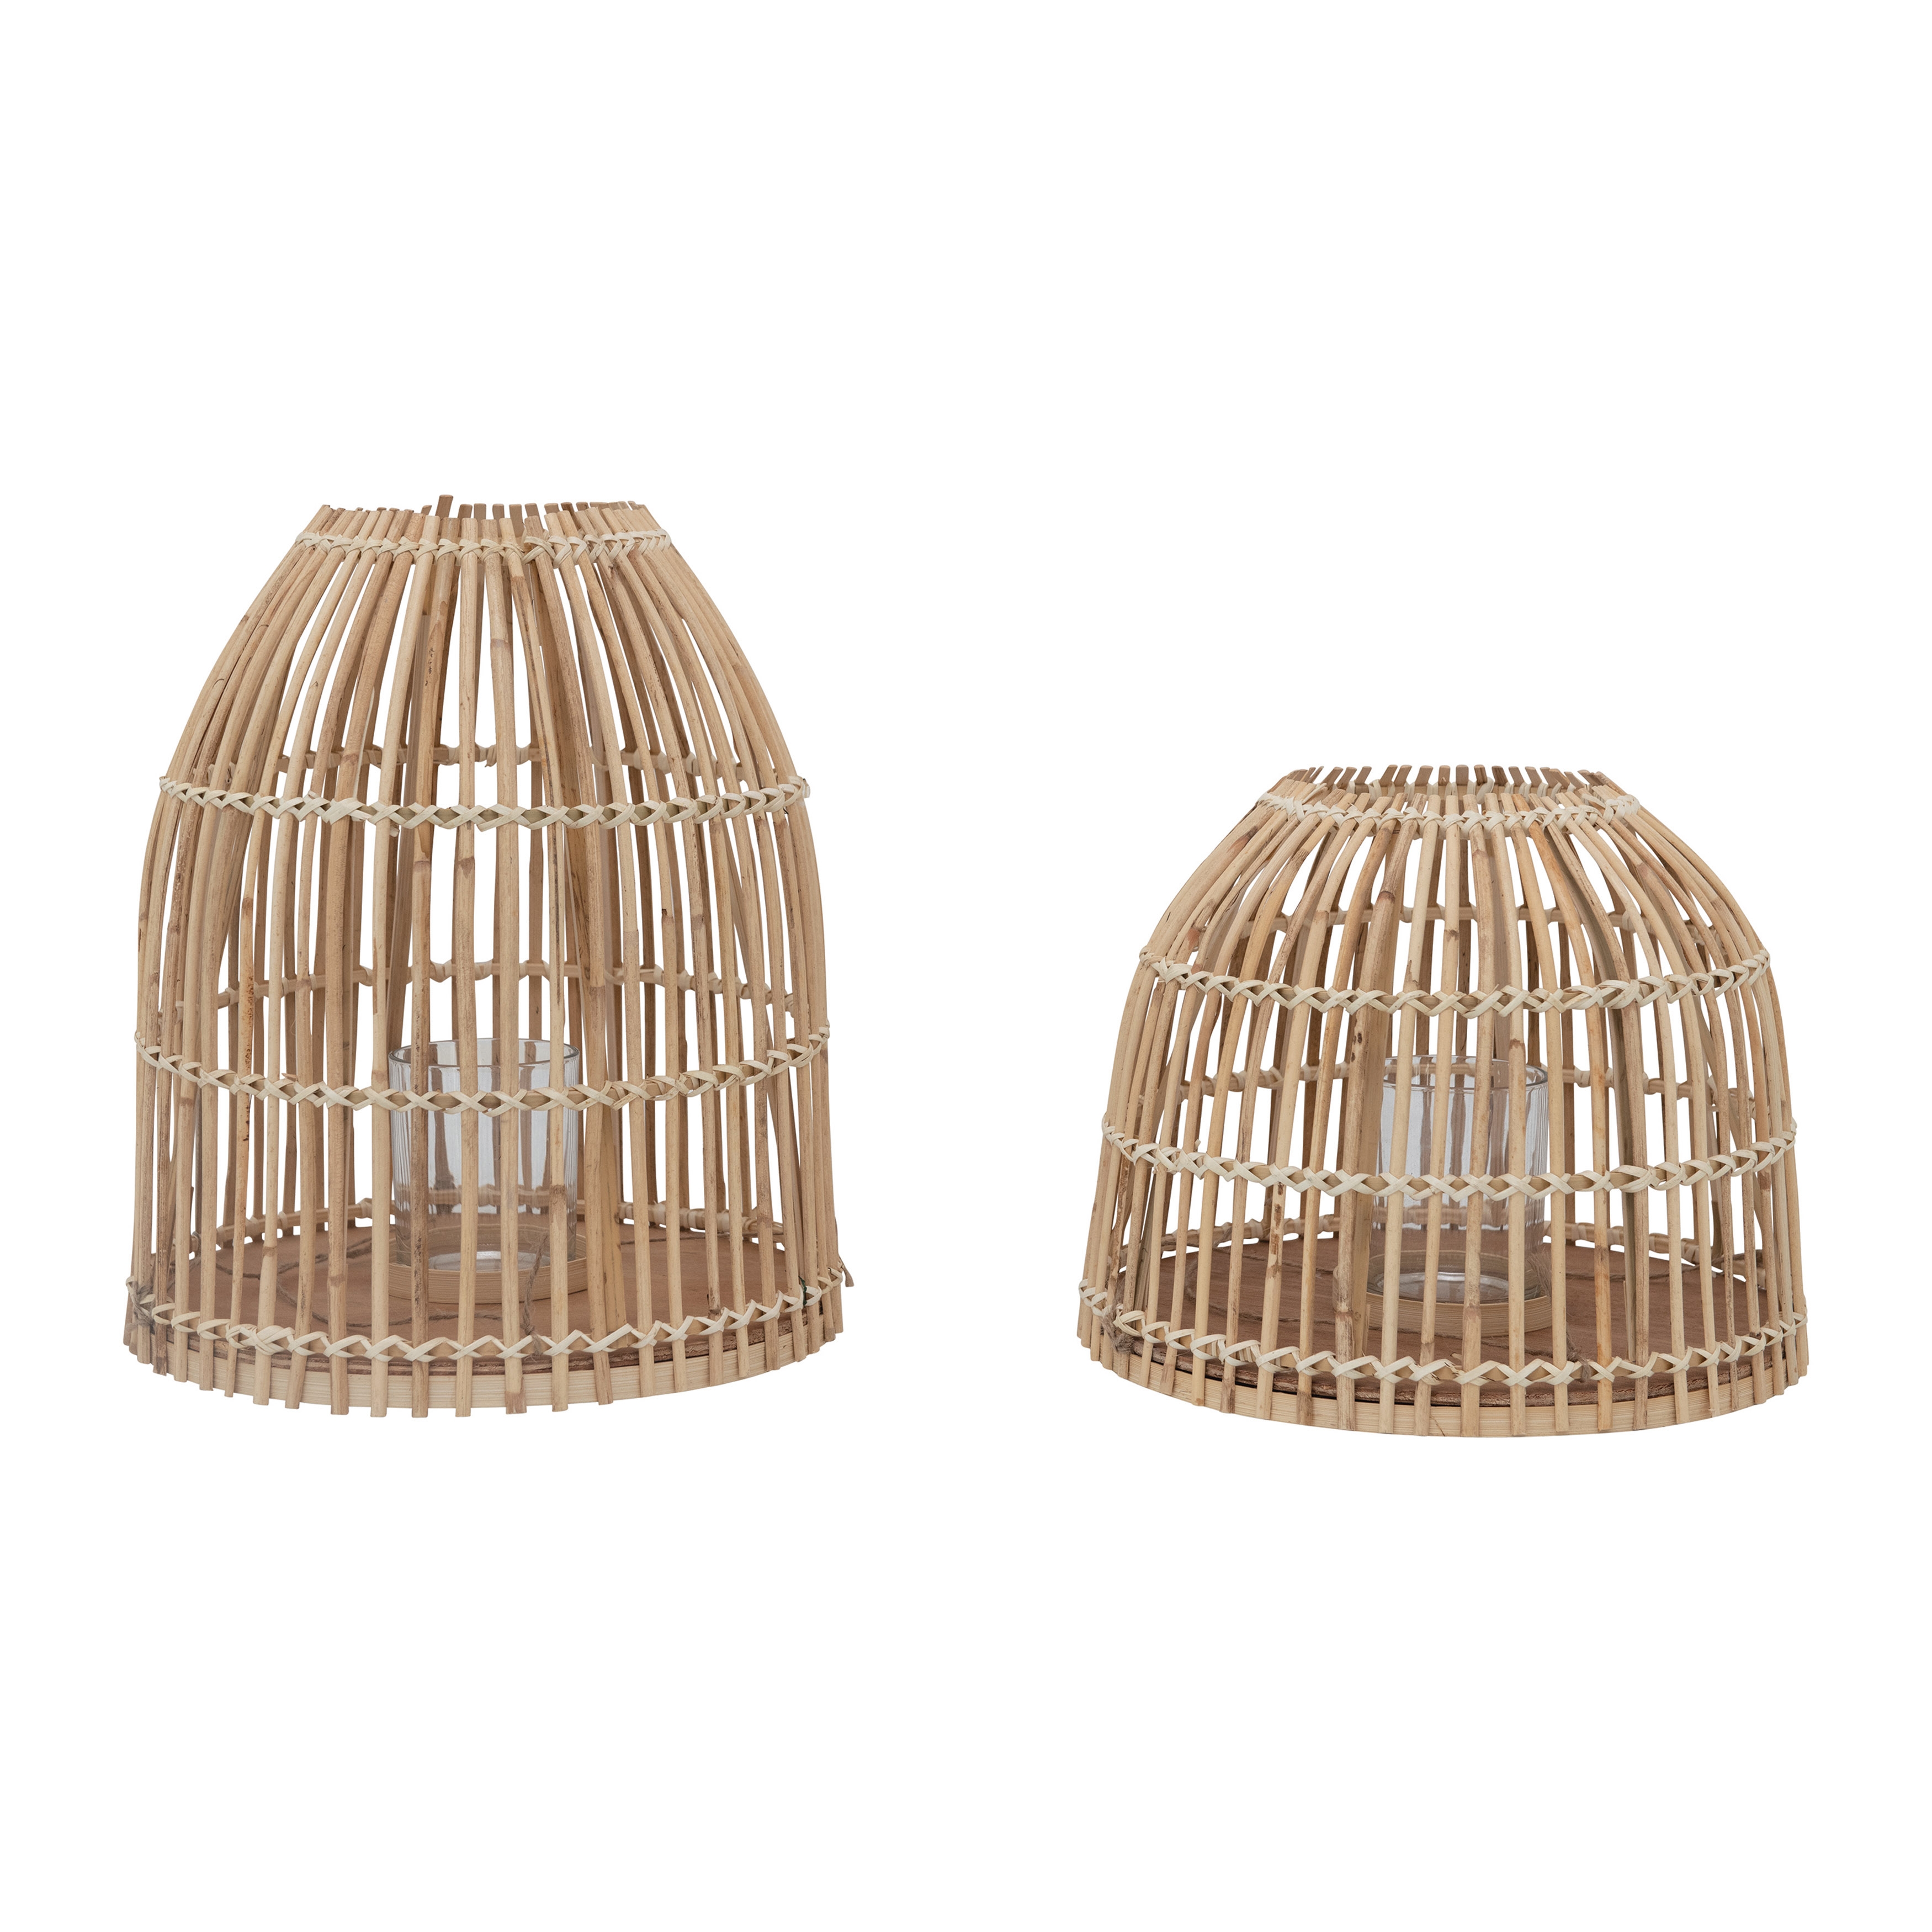 Bamboo Lanterns with Glass Inserts, Set of 2 Sizes - Image 0